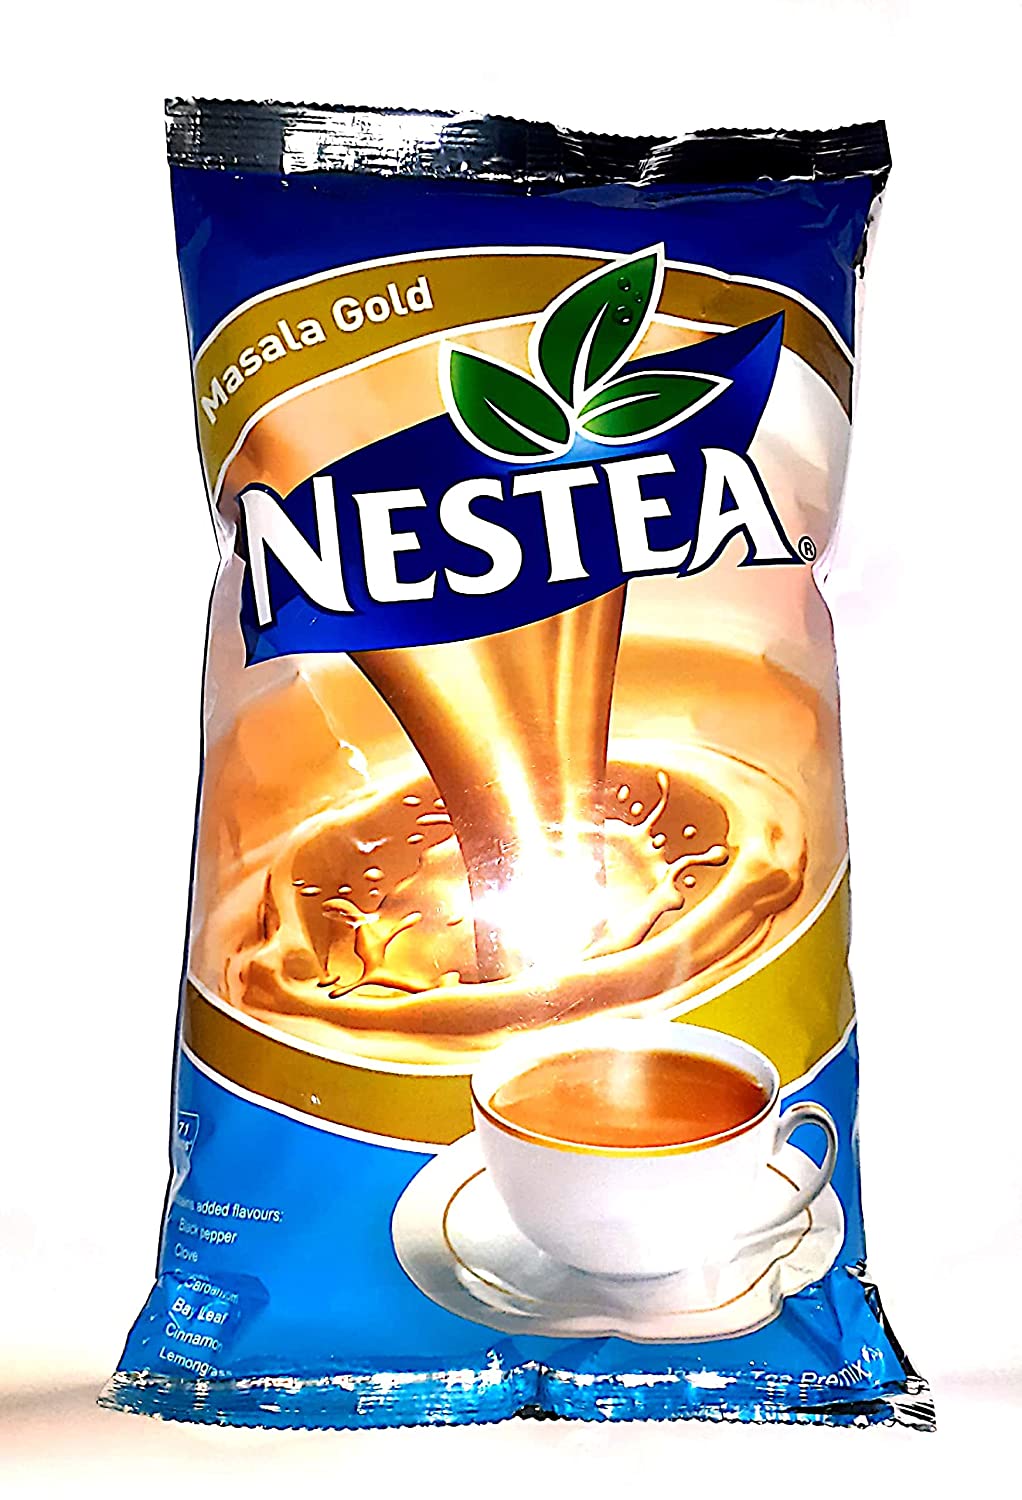 Nestle Nestea Masala Gold Tea Premix Image